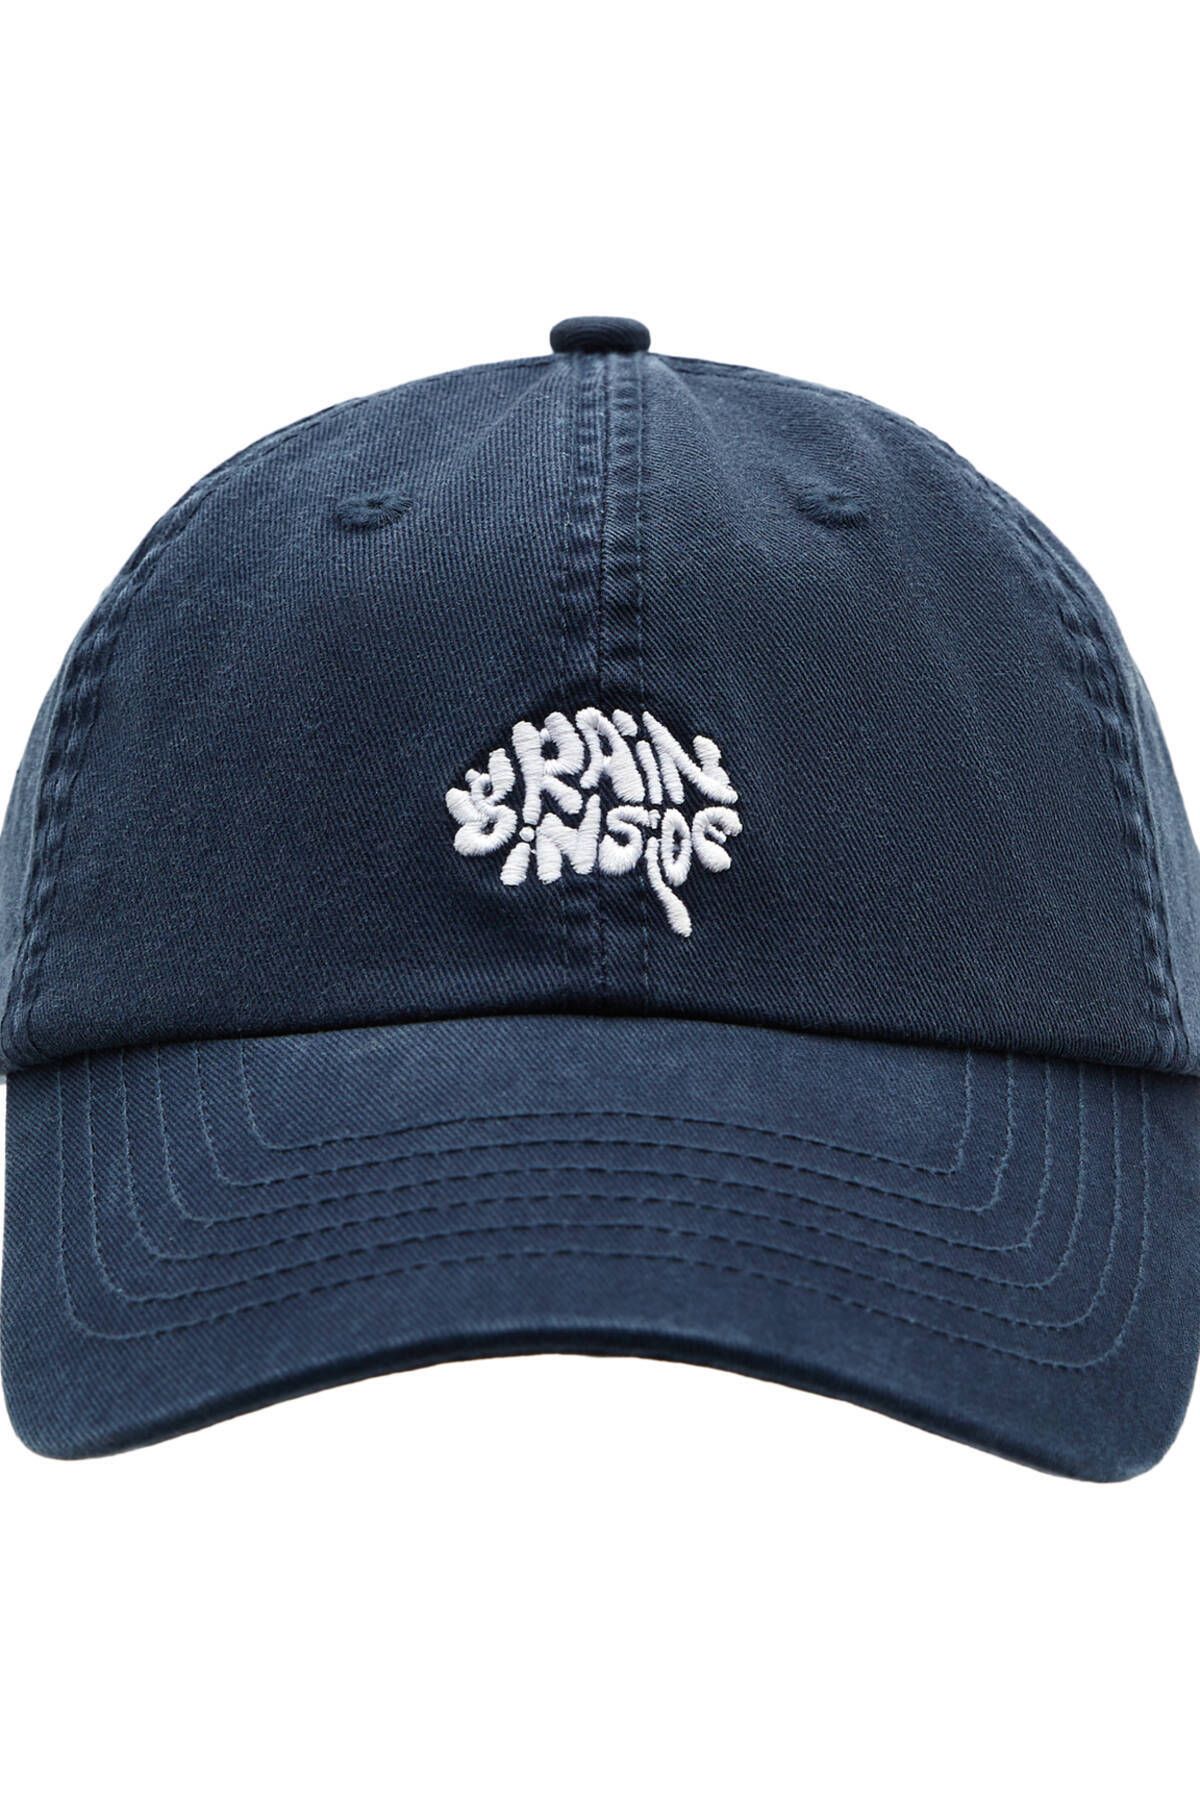 Pull & Bear Soluk efektli mavi şapka